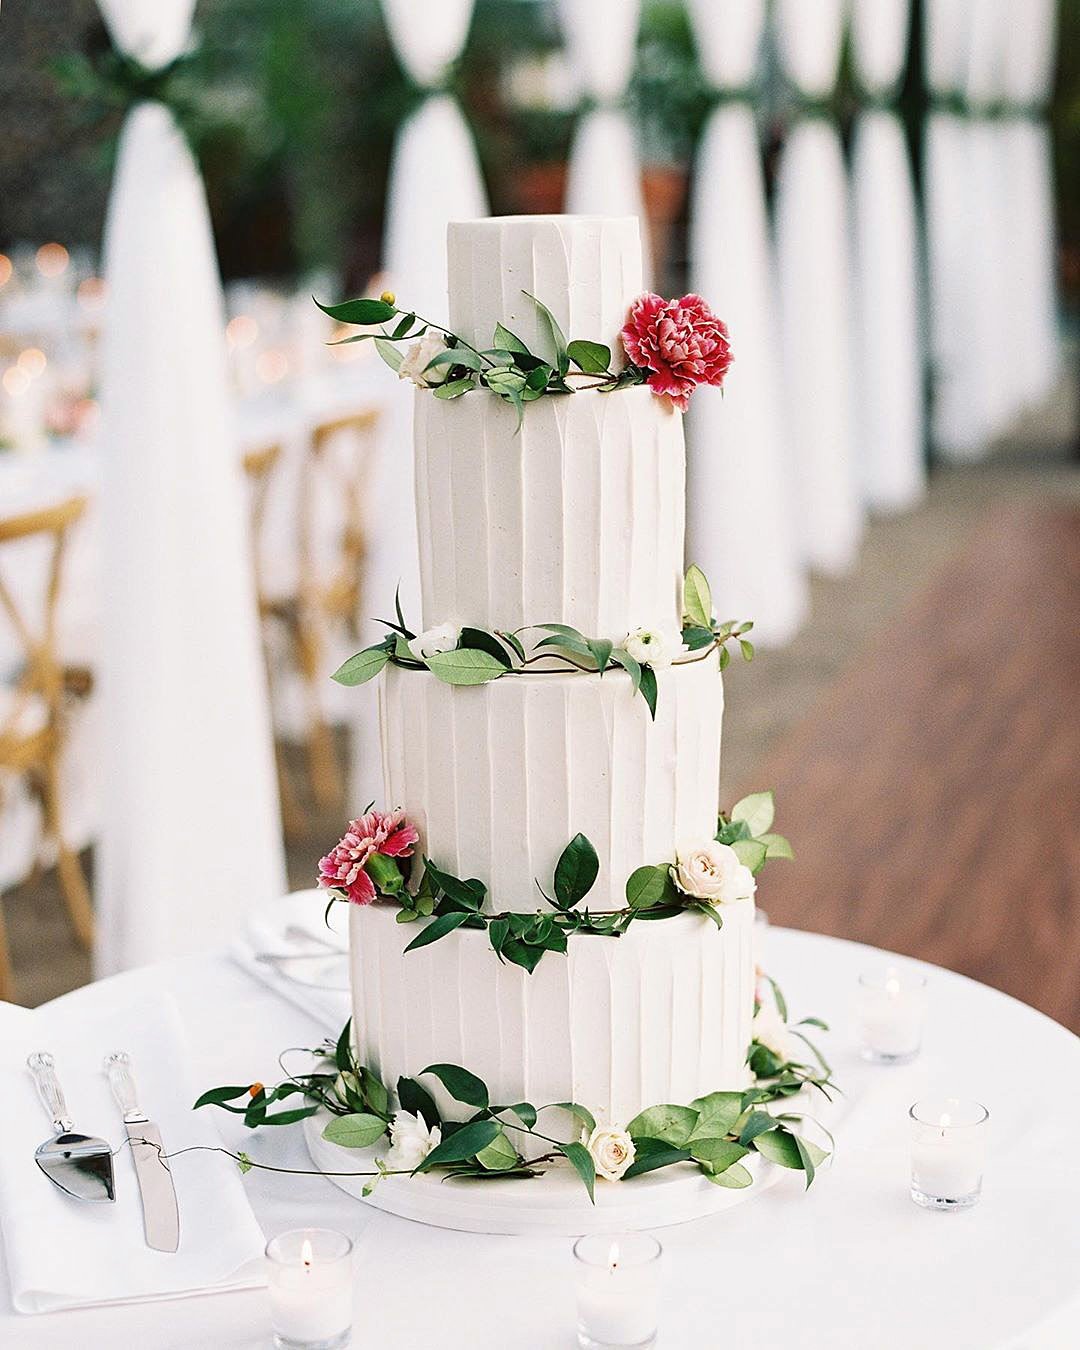 wedding colors Hunter Green Garnet Red Snowy White wedding cake with greenery decor